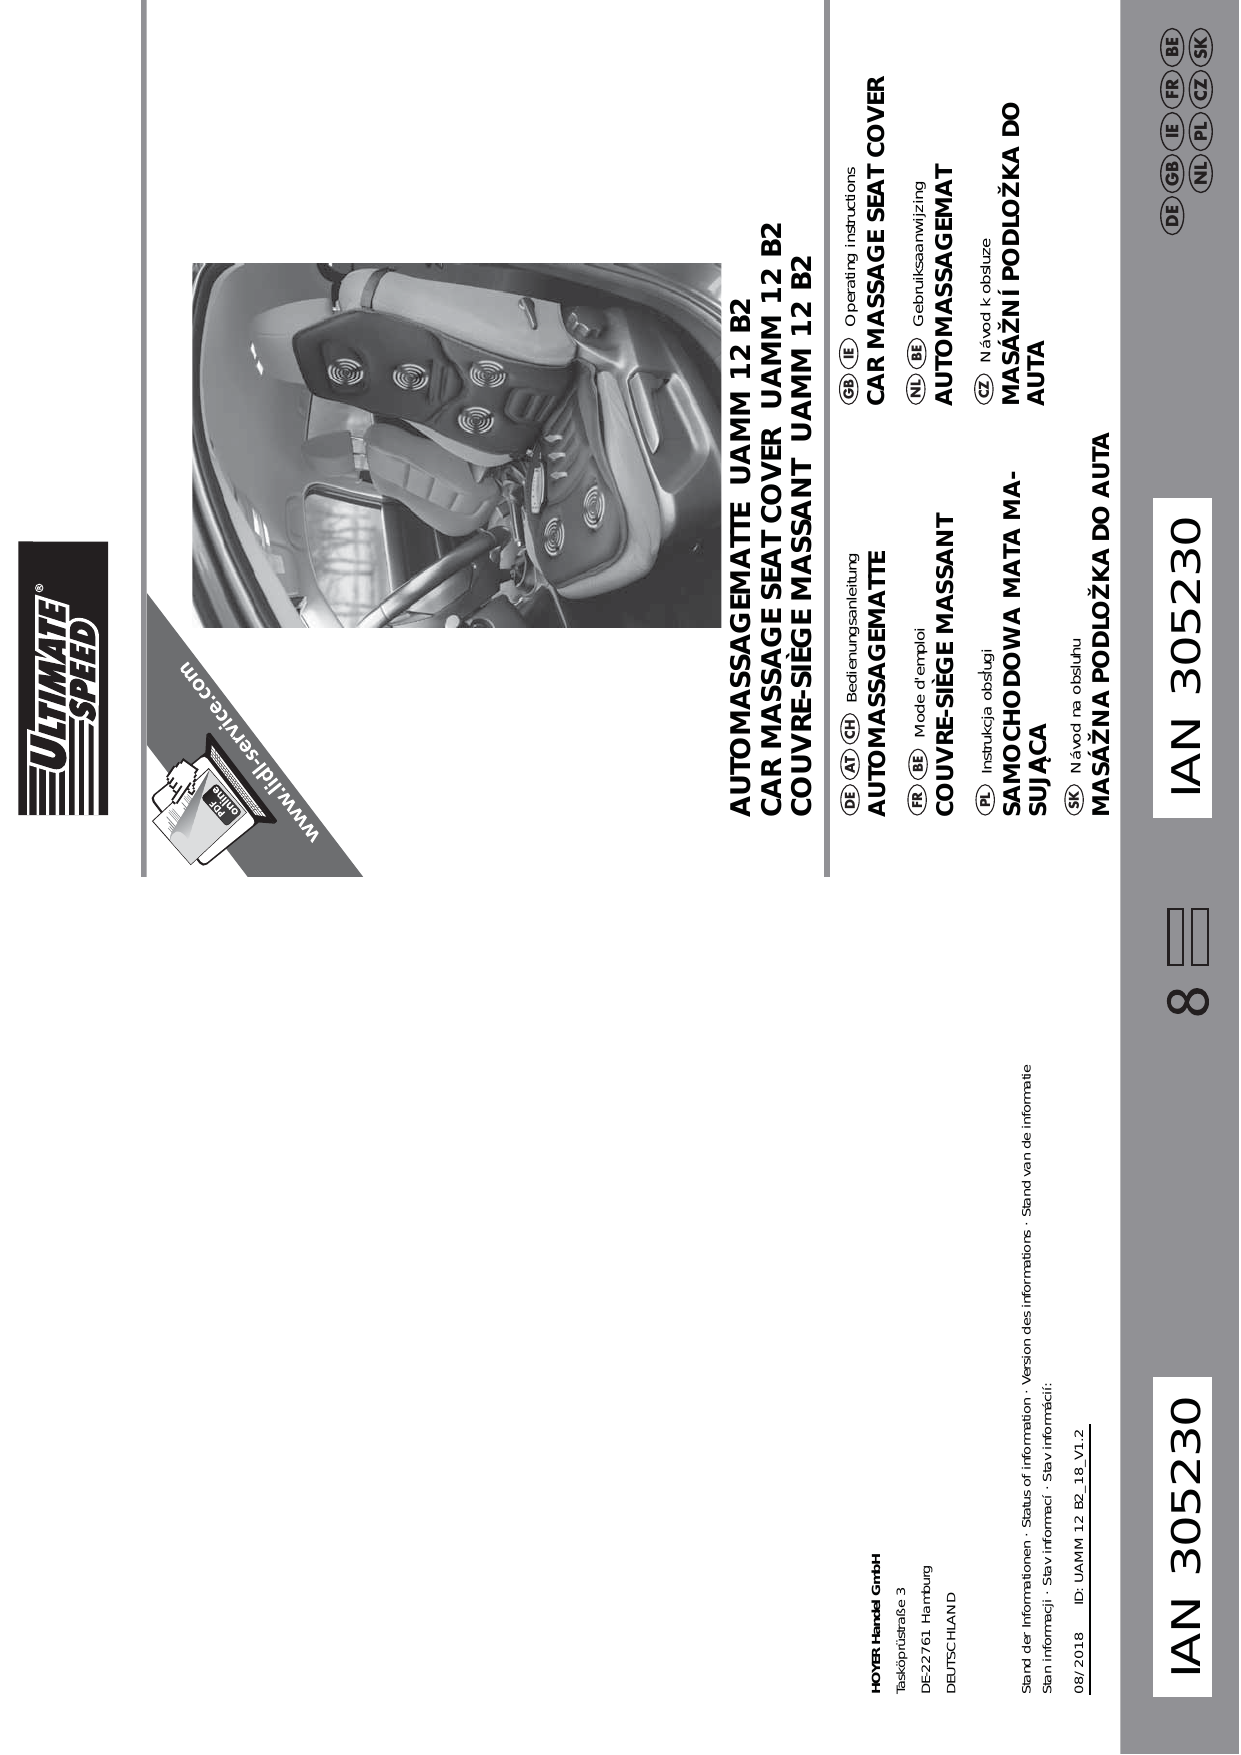 ULTIMATE SPEED UAMM 12 B2 Operating Instructions Manual | Manualzz